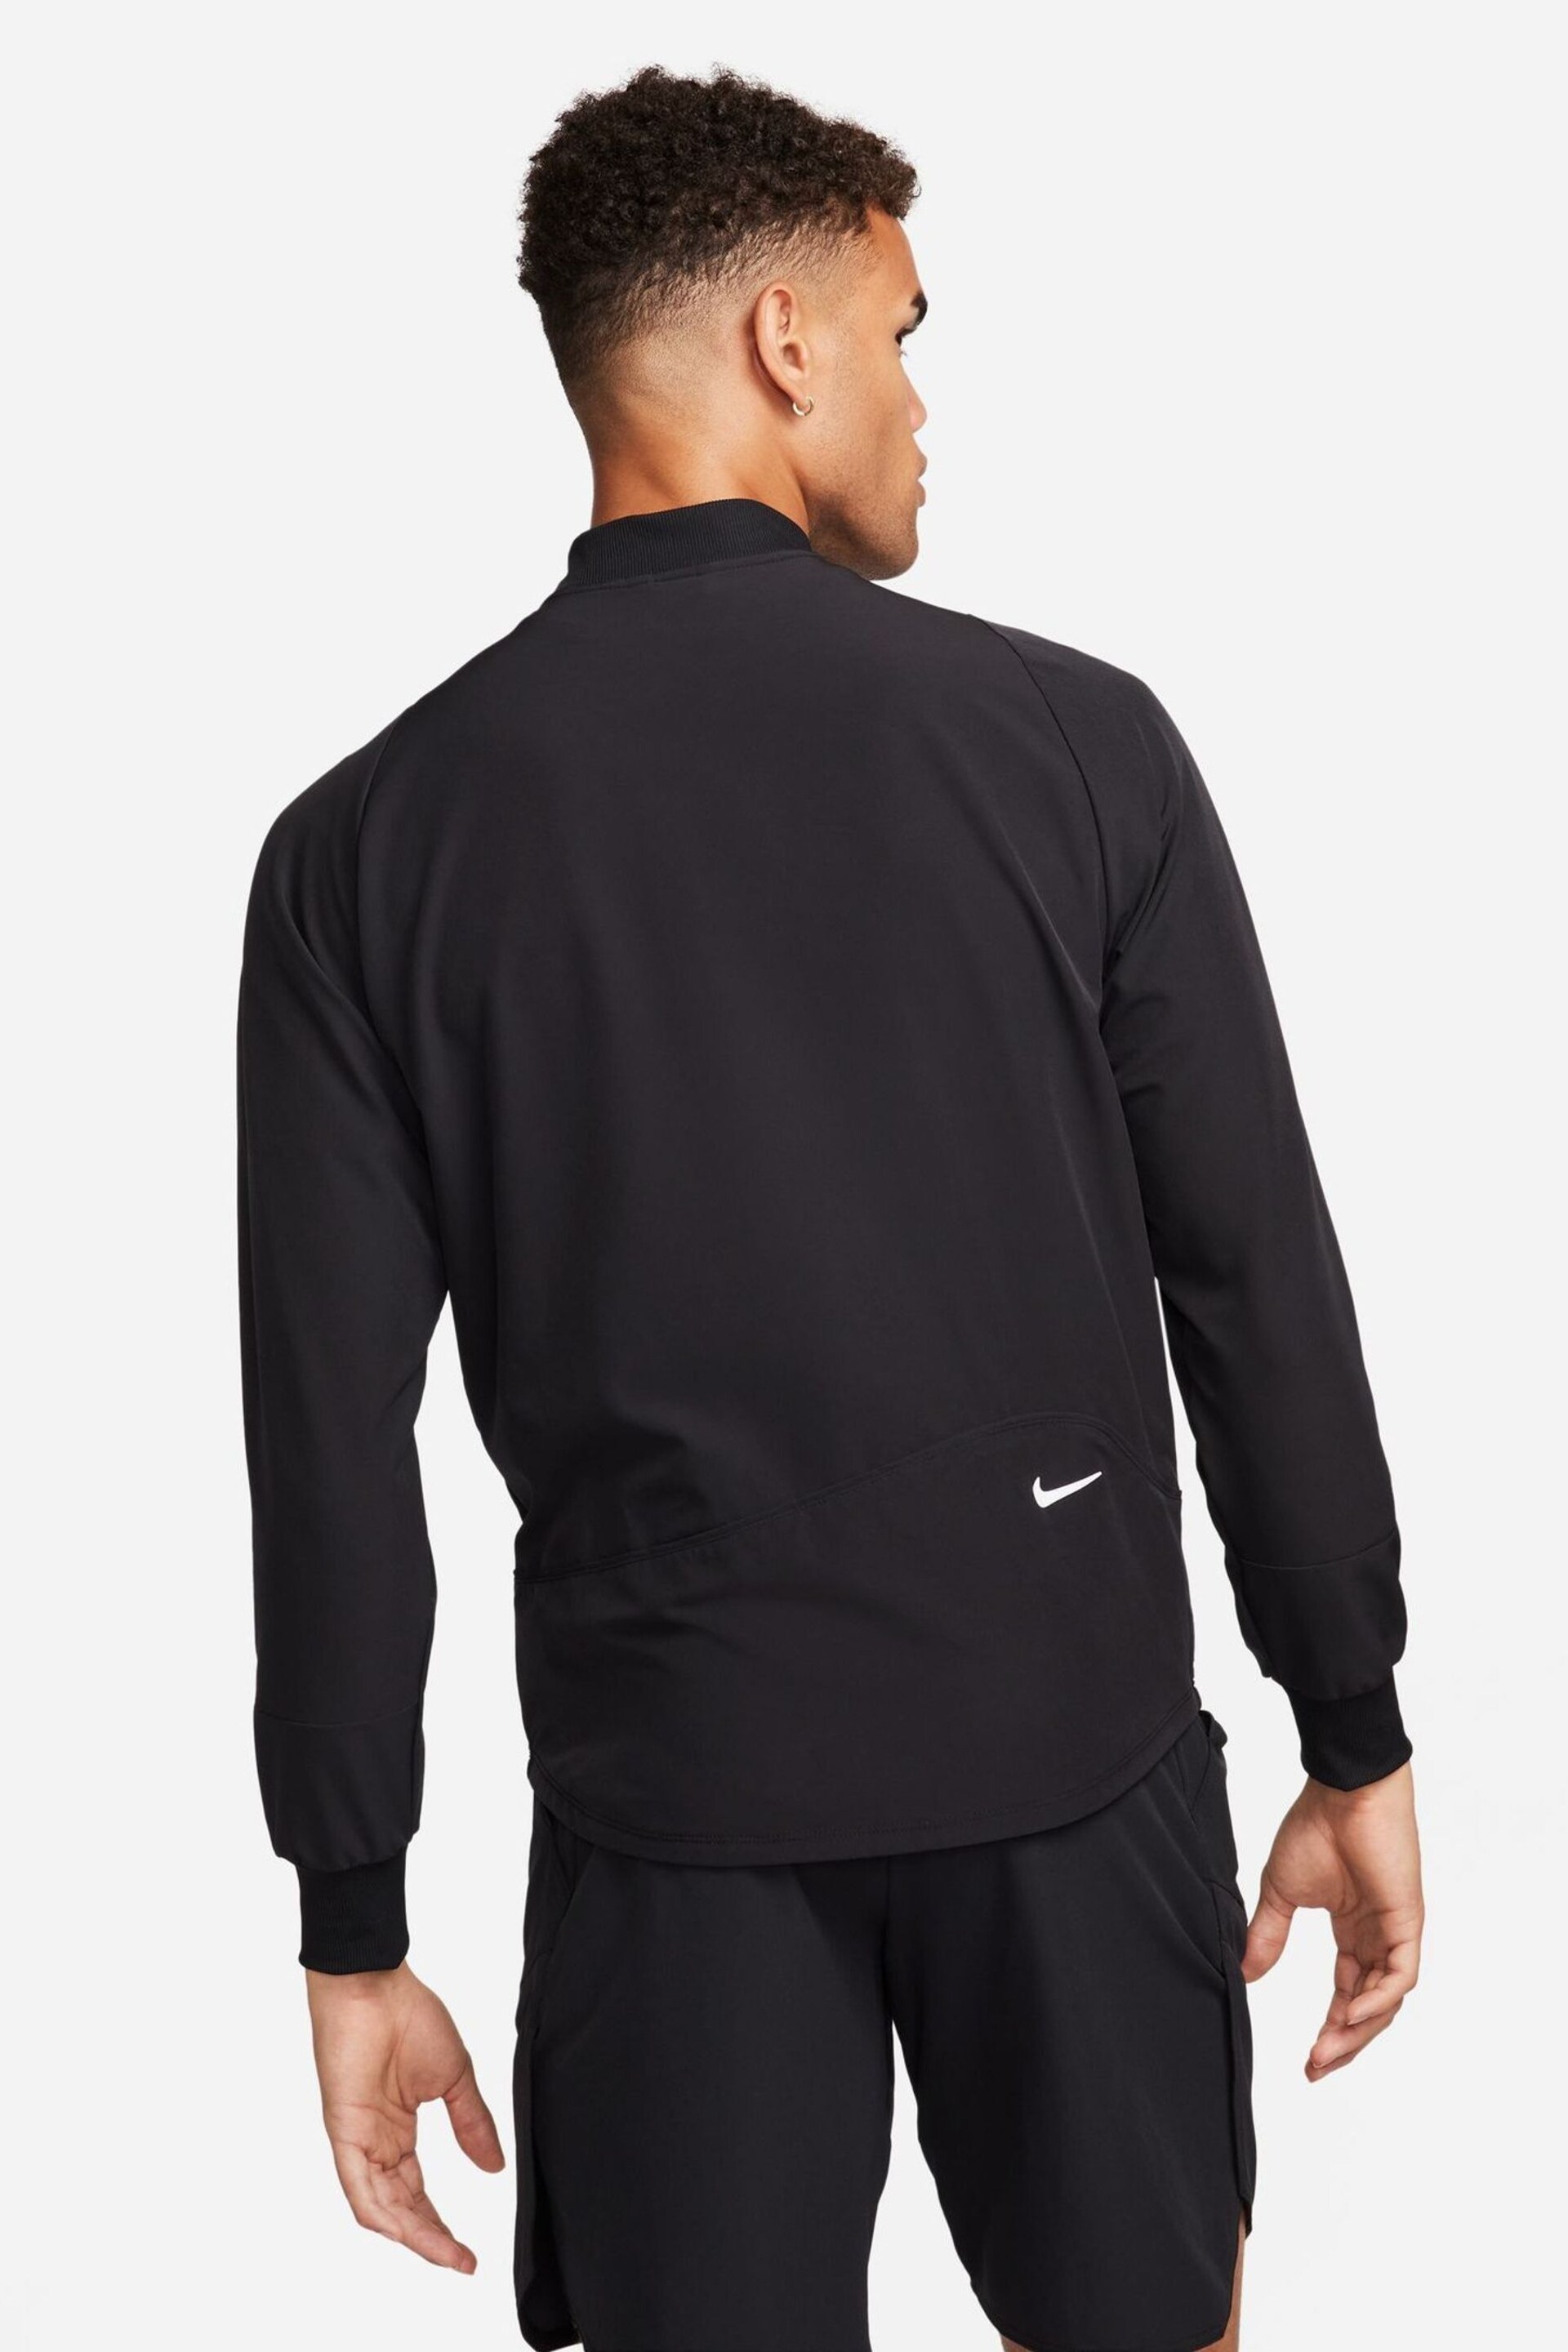 Nike Black Court Advantage Dri-FIT Tennis Jacket - Image 2 of 6